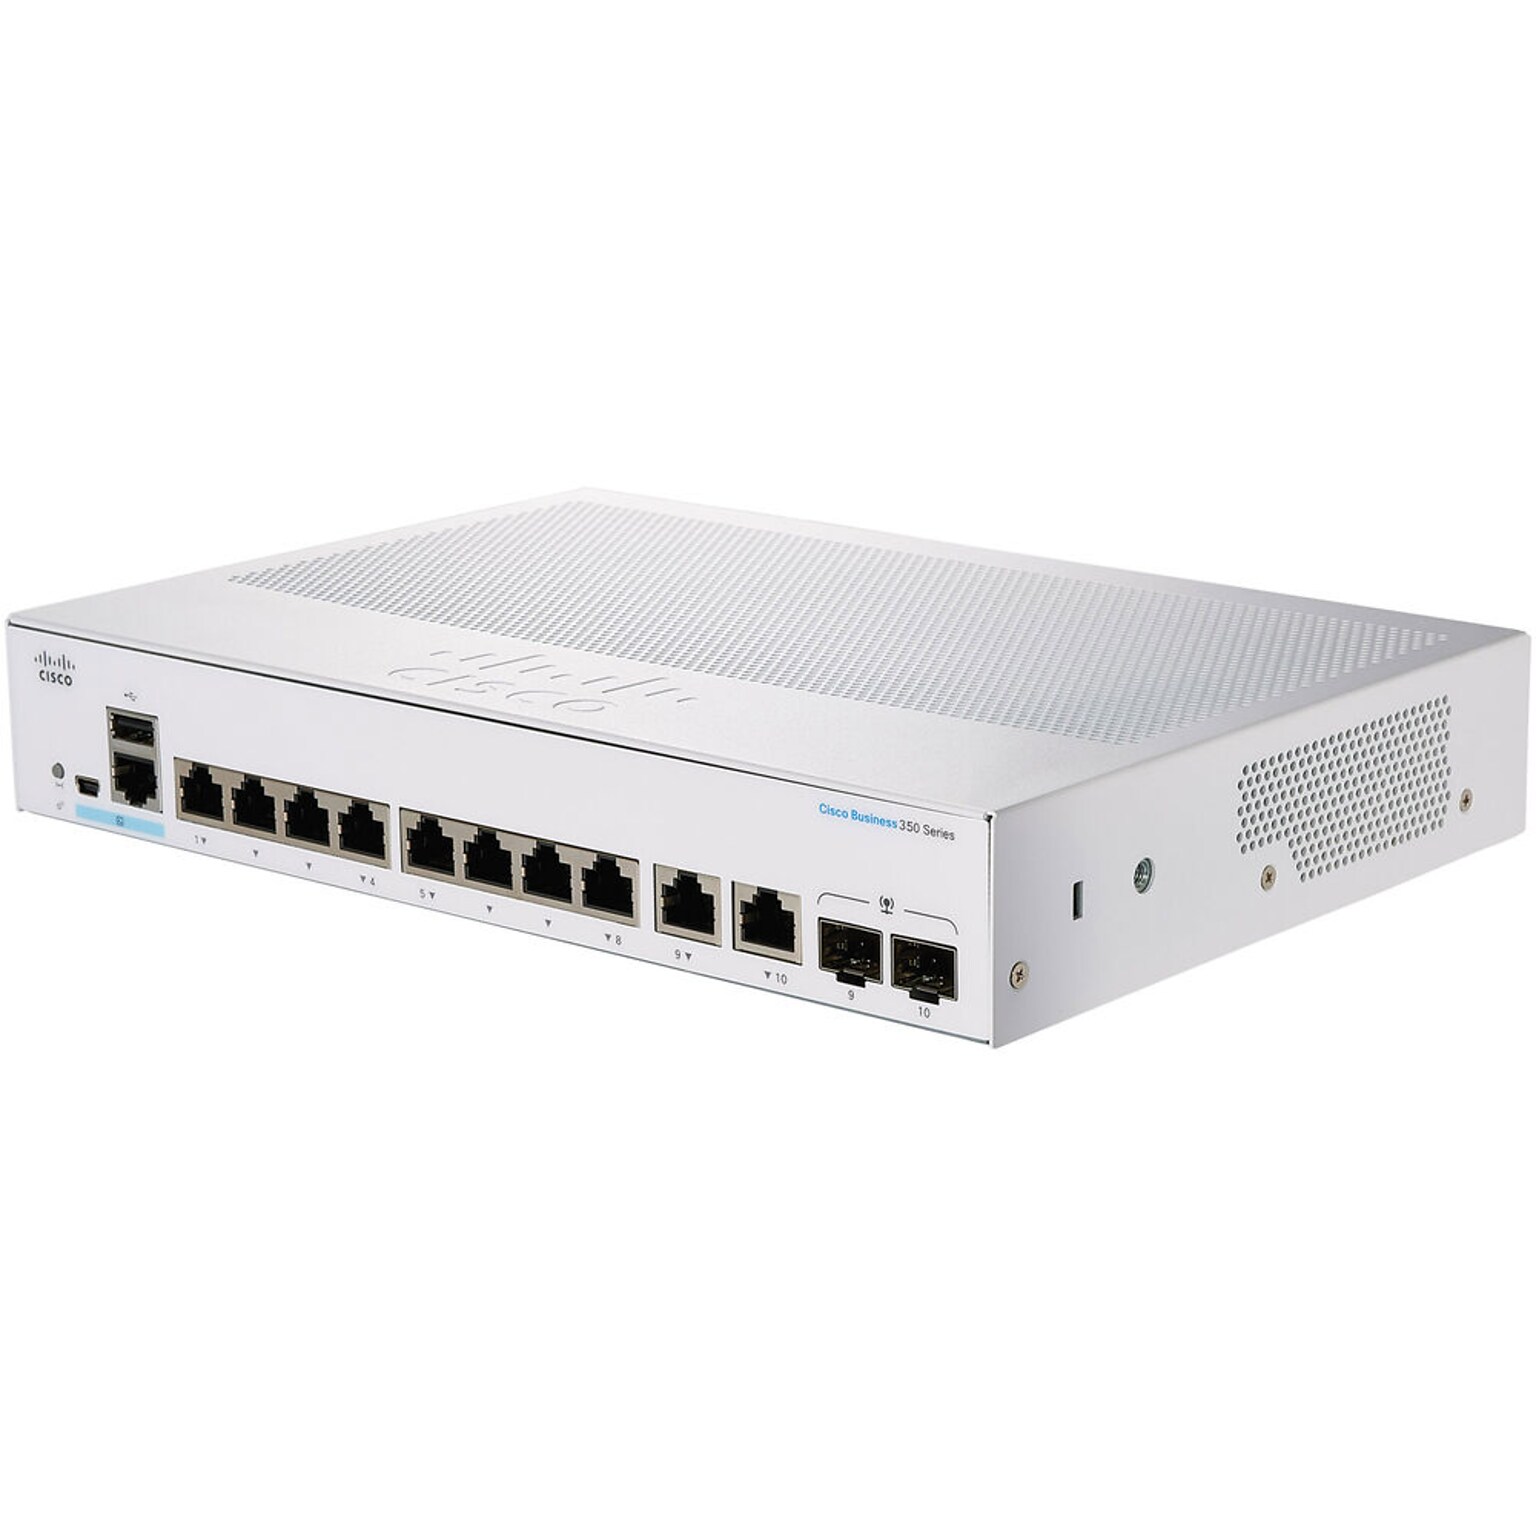 Cisco 350 10-Port Gigabit Ethernet Managed Switch, Silver (CBS3508TE2GNA)